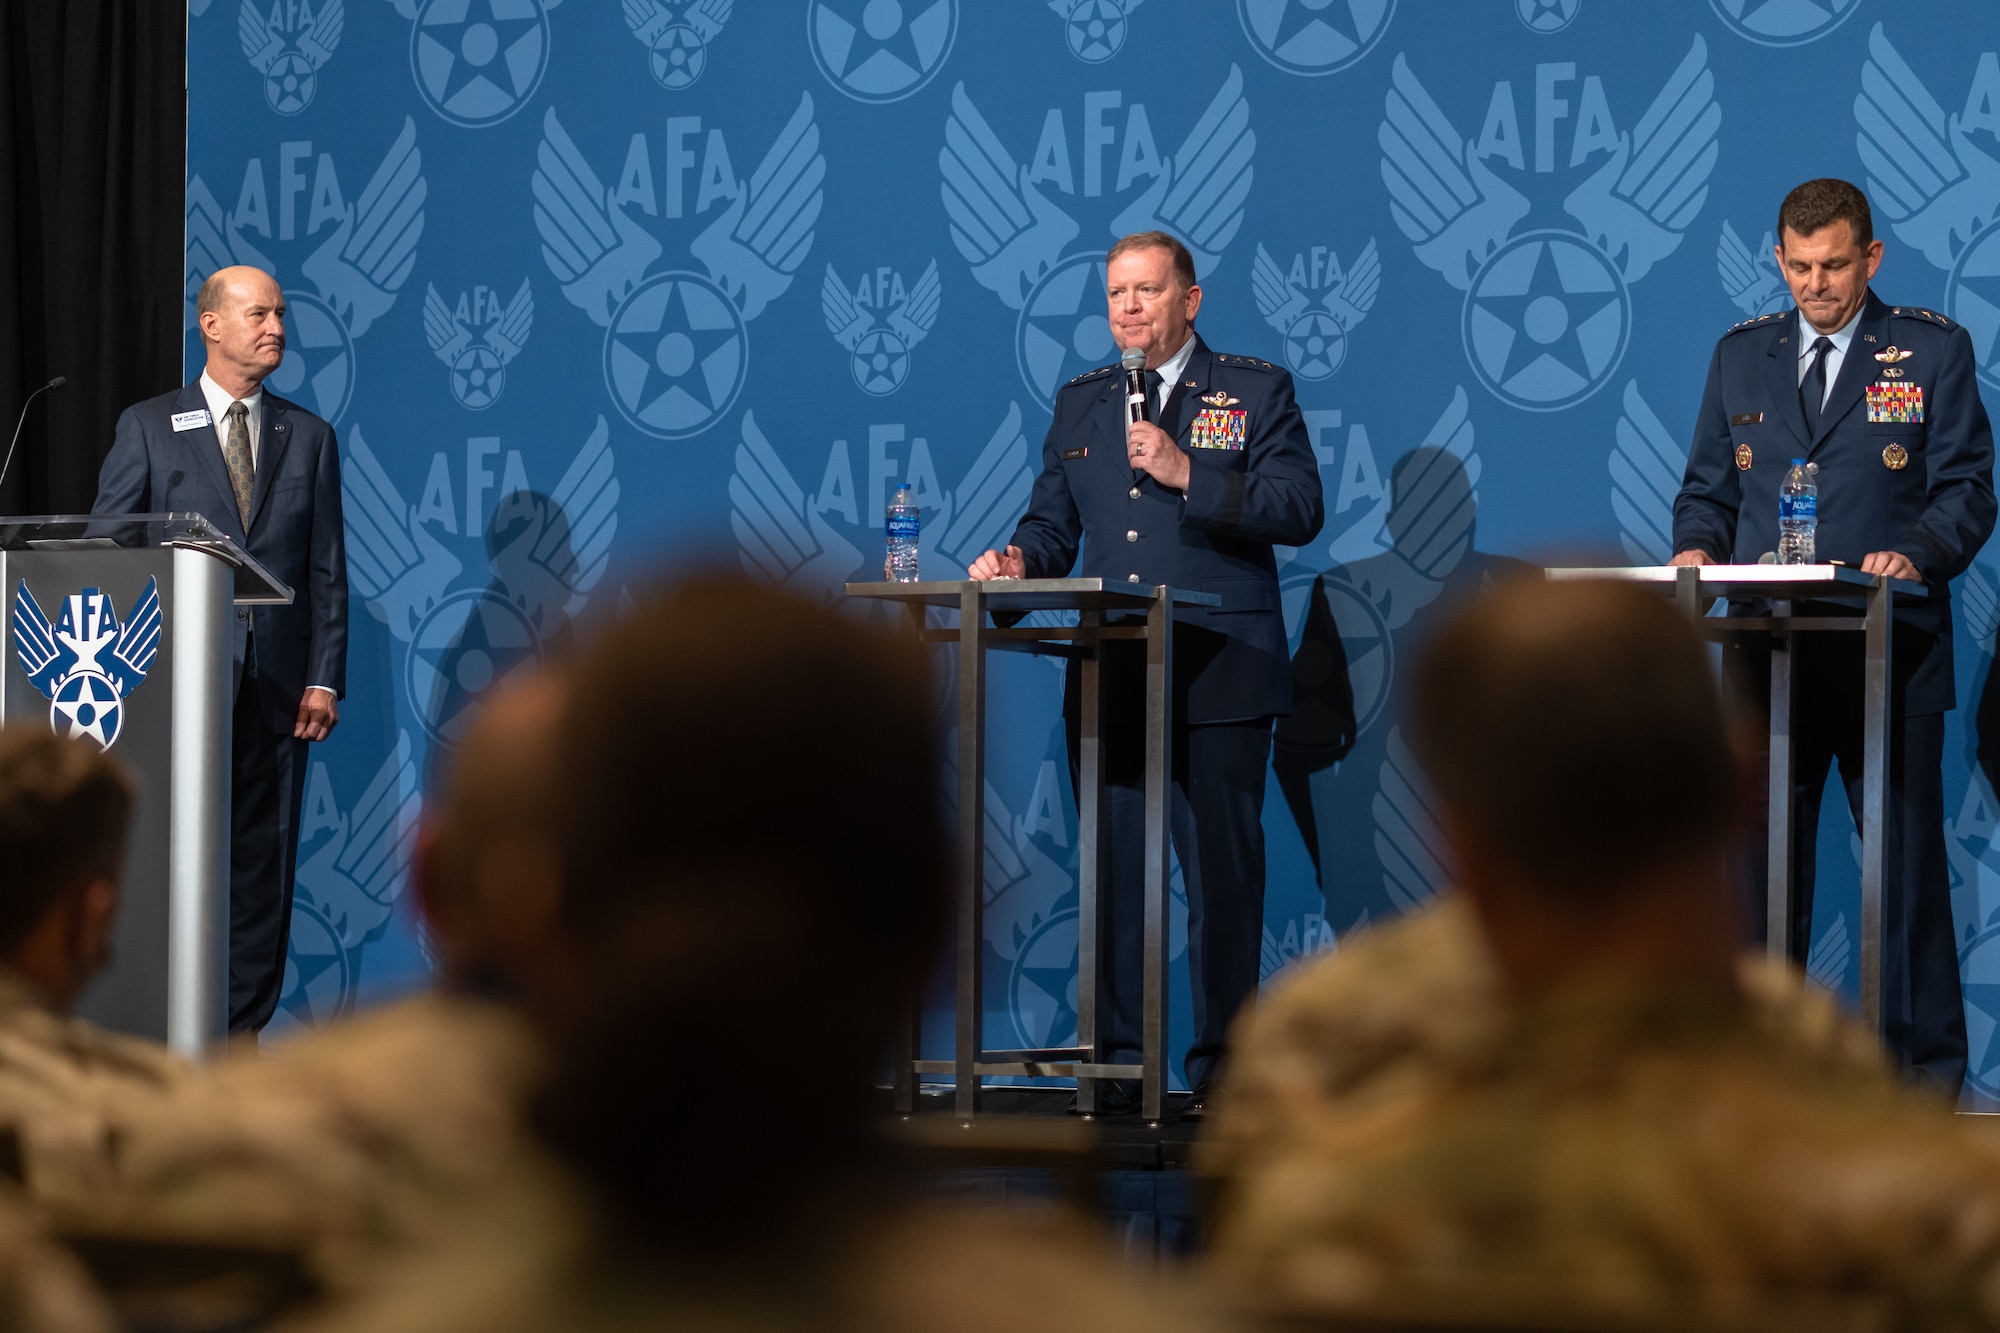 AFRC commander discusses Reserve successes and future vision at Air